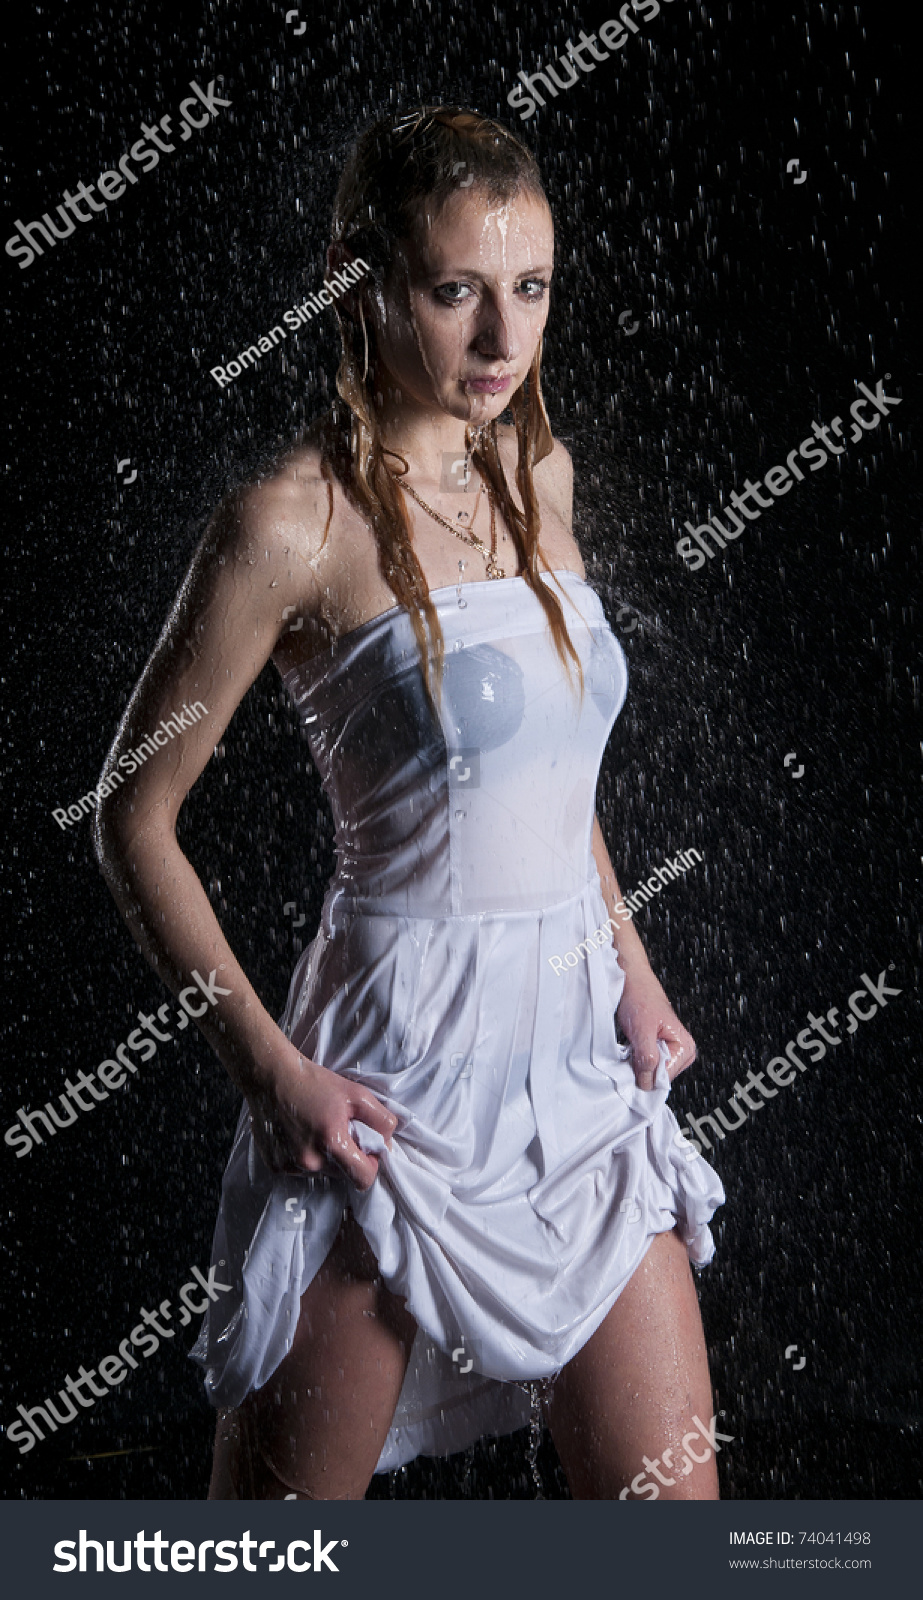 Download Bellesa Wet White Dress Under Shower Girl Takes A Bath In